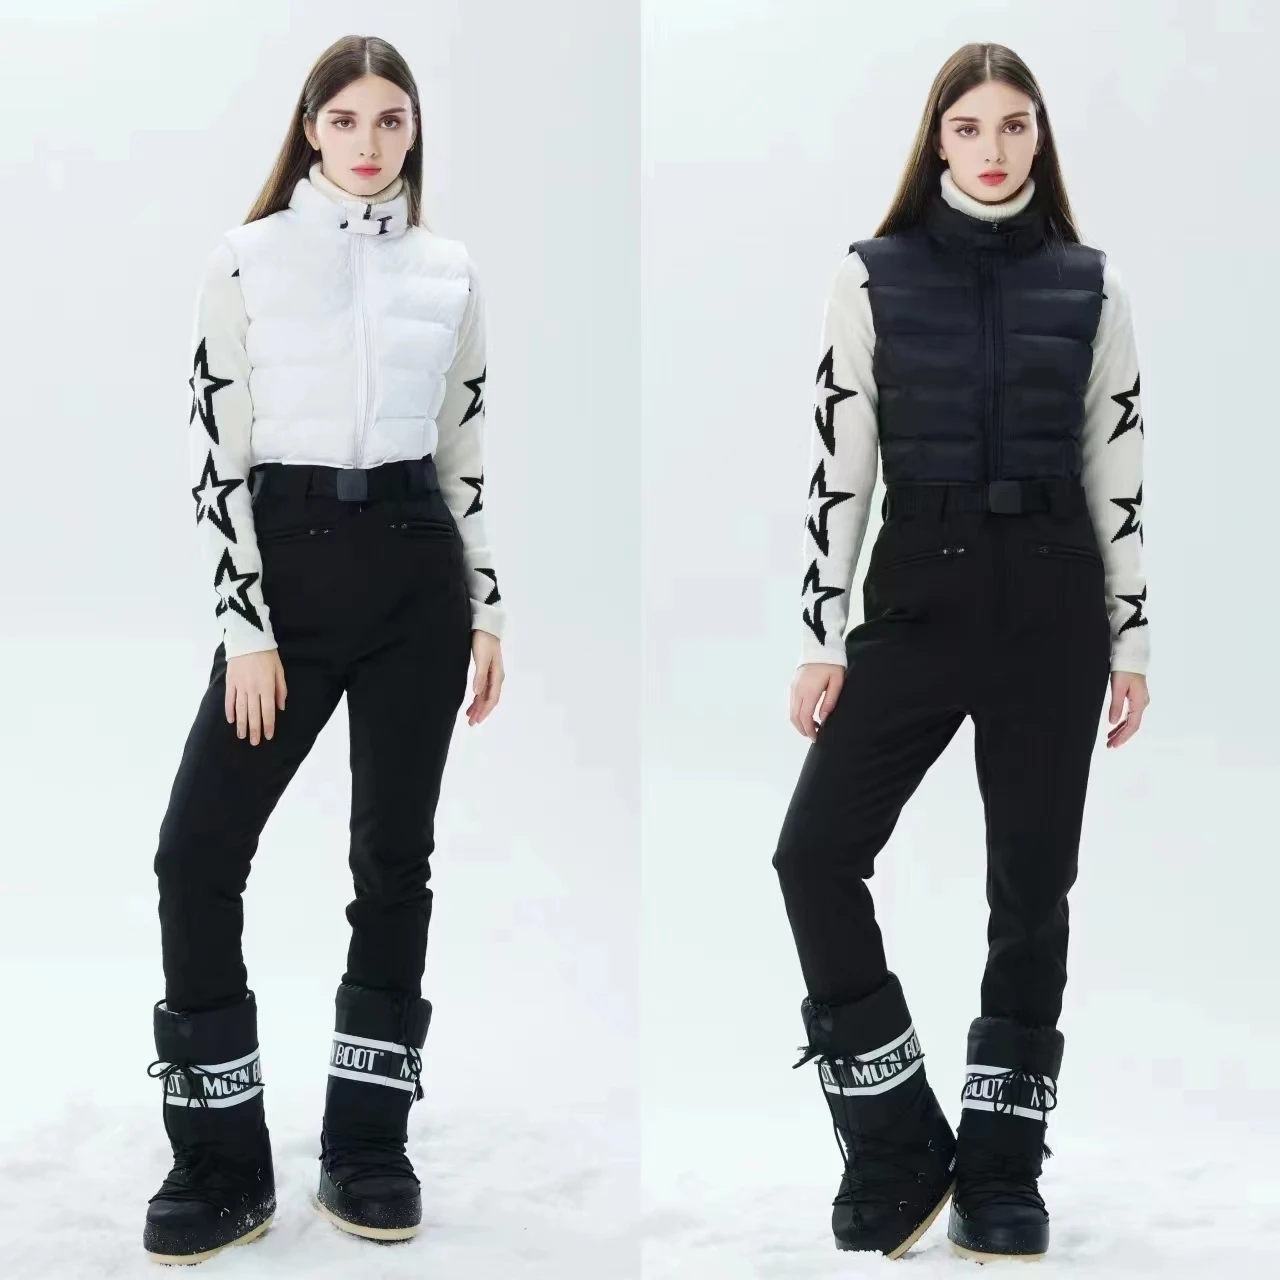 

Showtime Dmt slim ski breathable suit women snowboard clothing snow suit windproof waterproof one piece bib ski wear